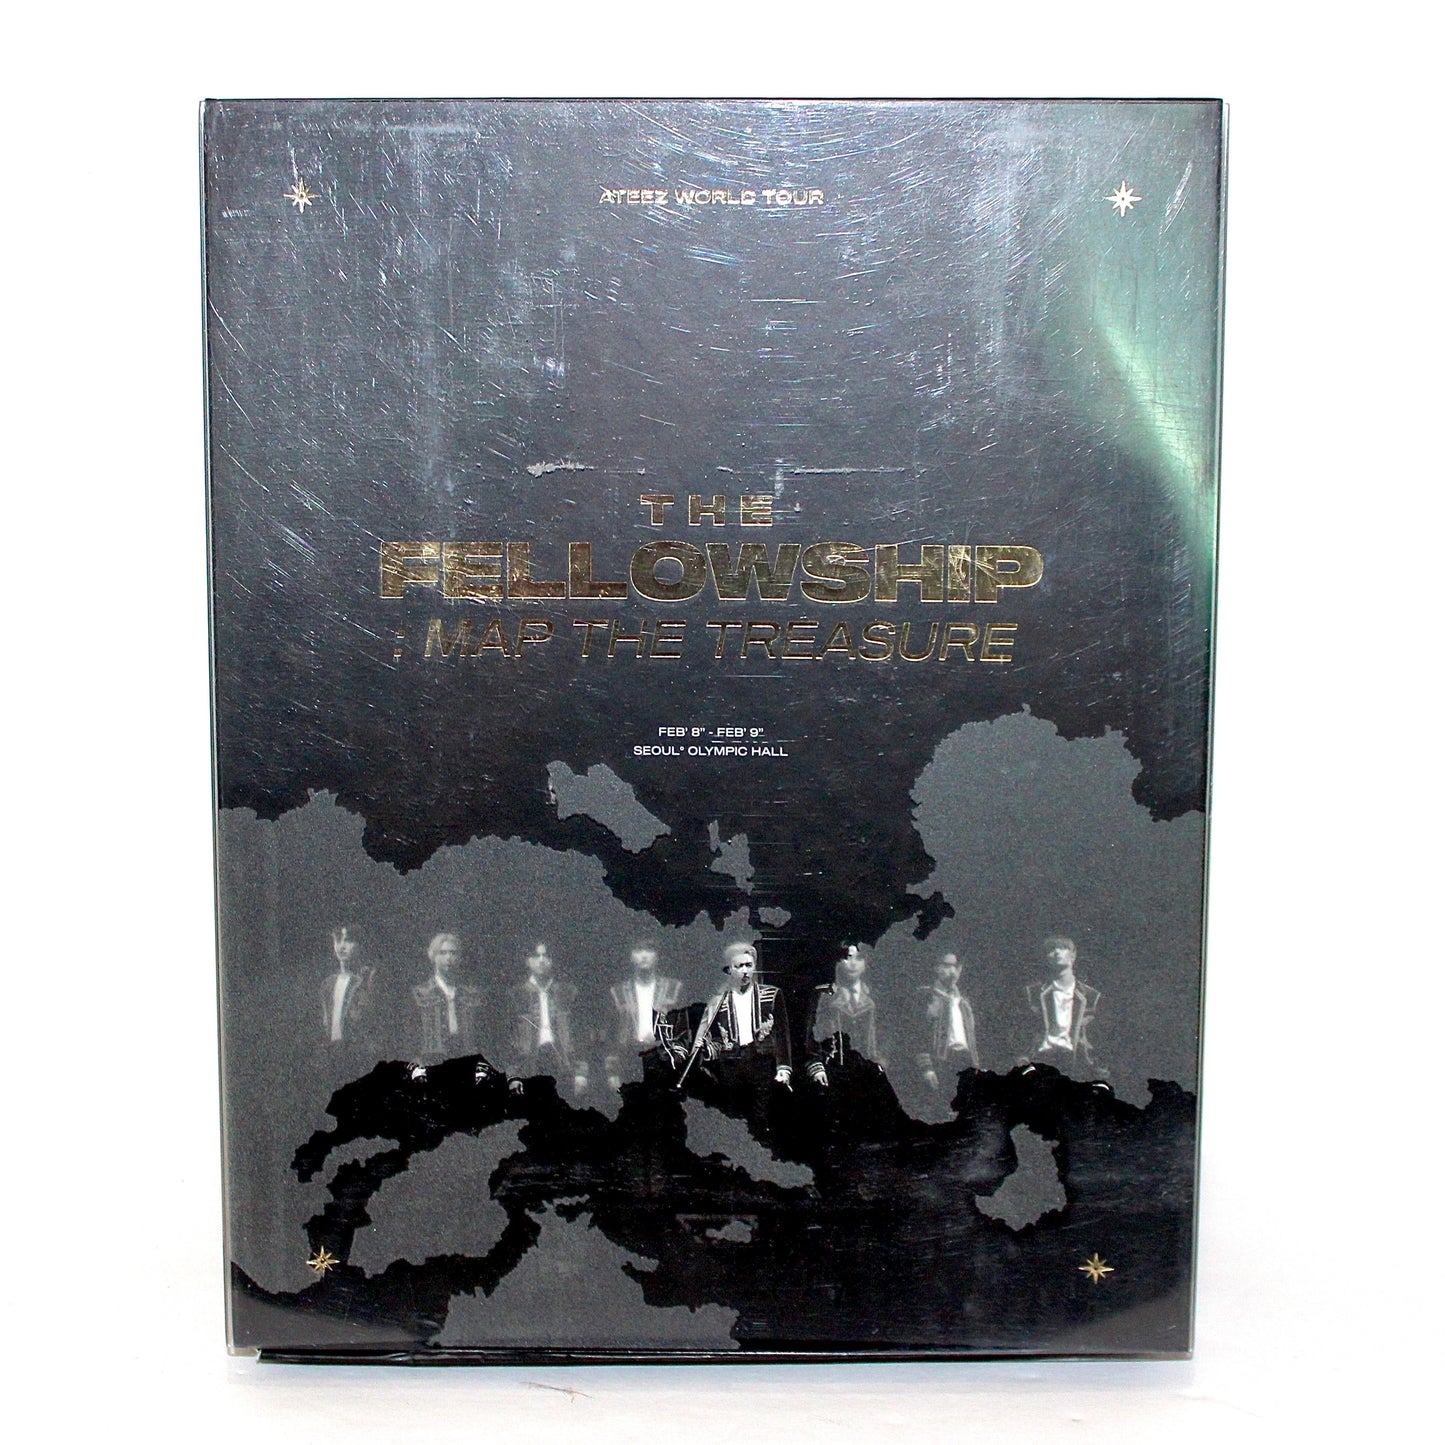 ATEEZ 2020 World Tour - The Fellowship: Map the Treasure Seoul | DVD